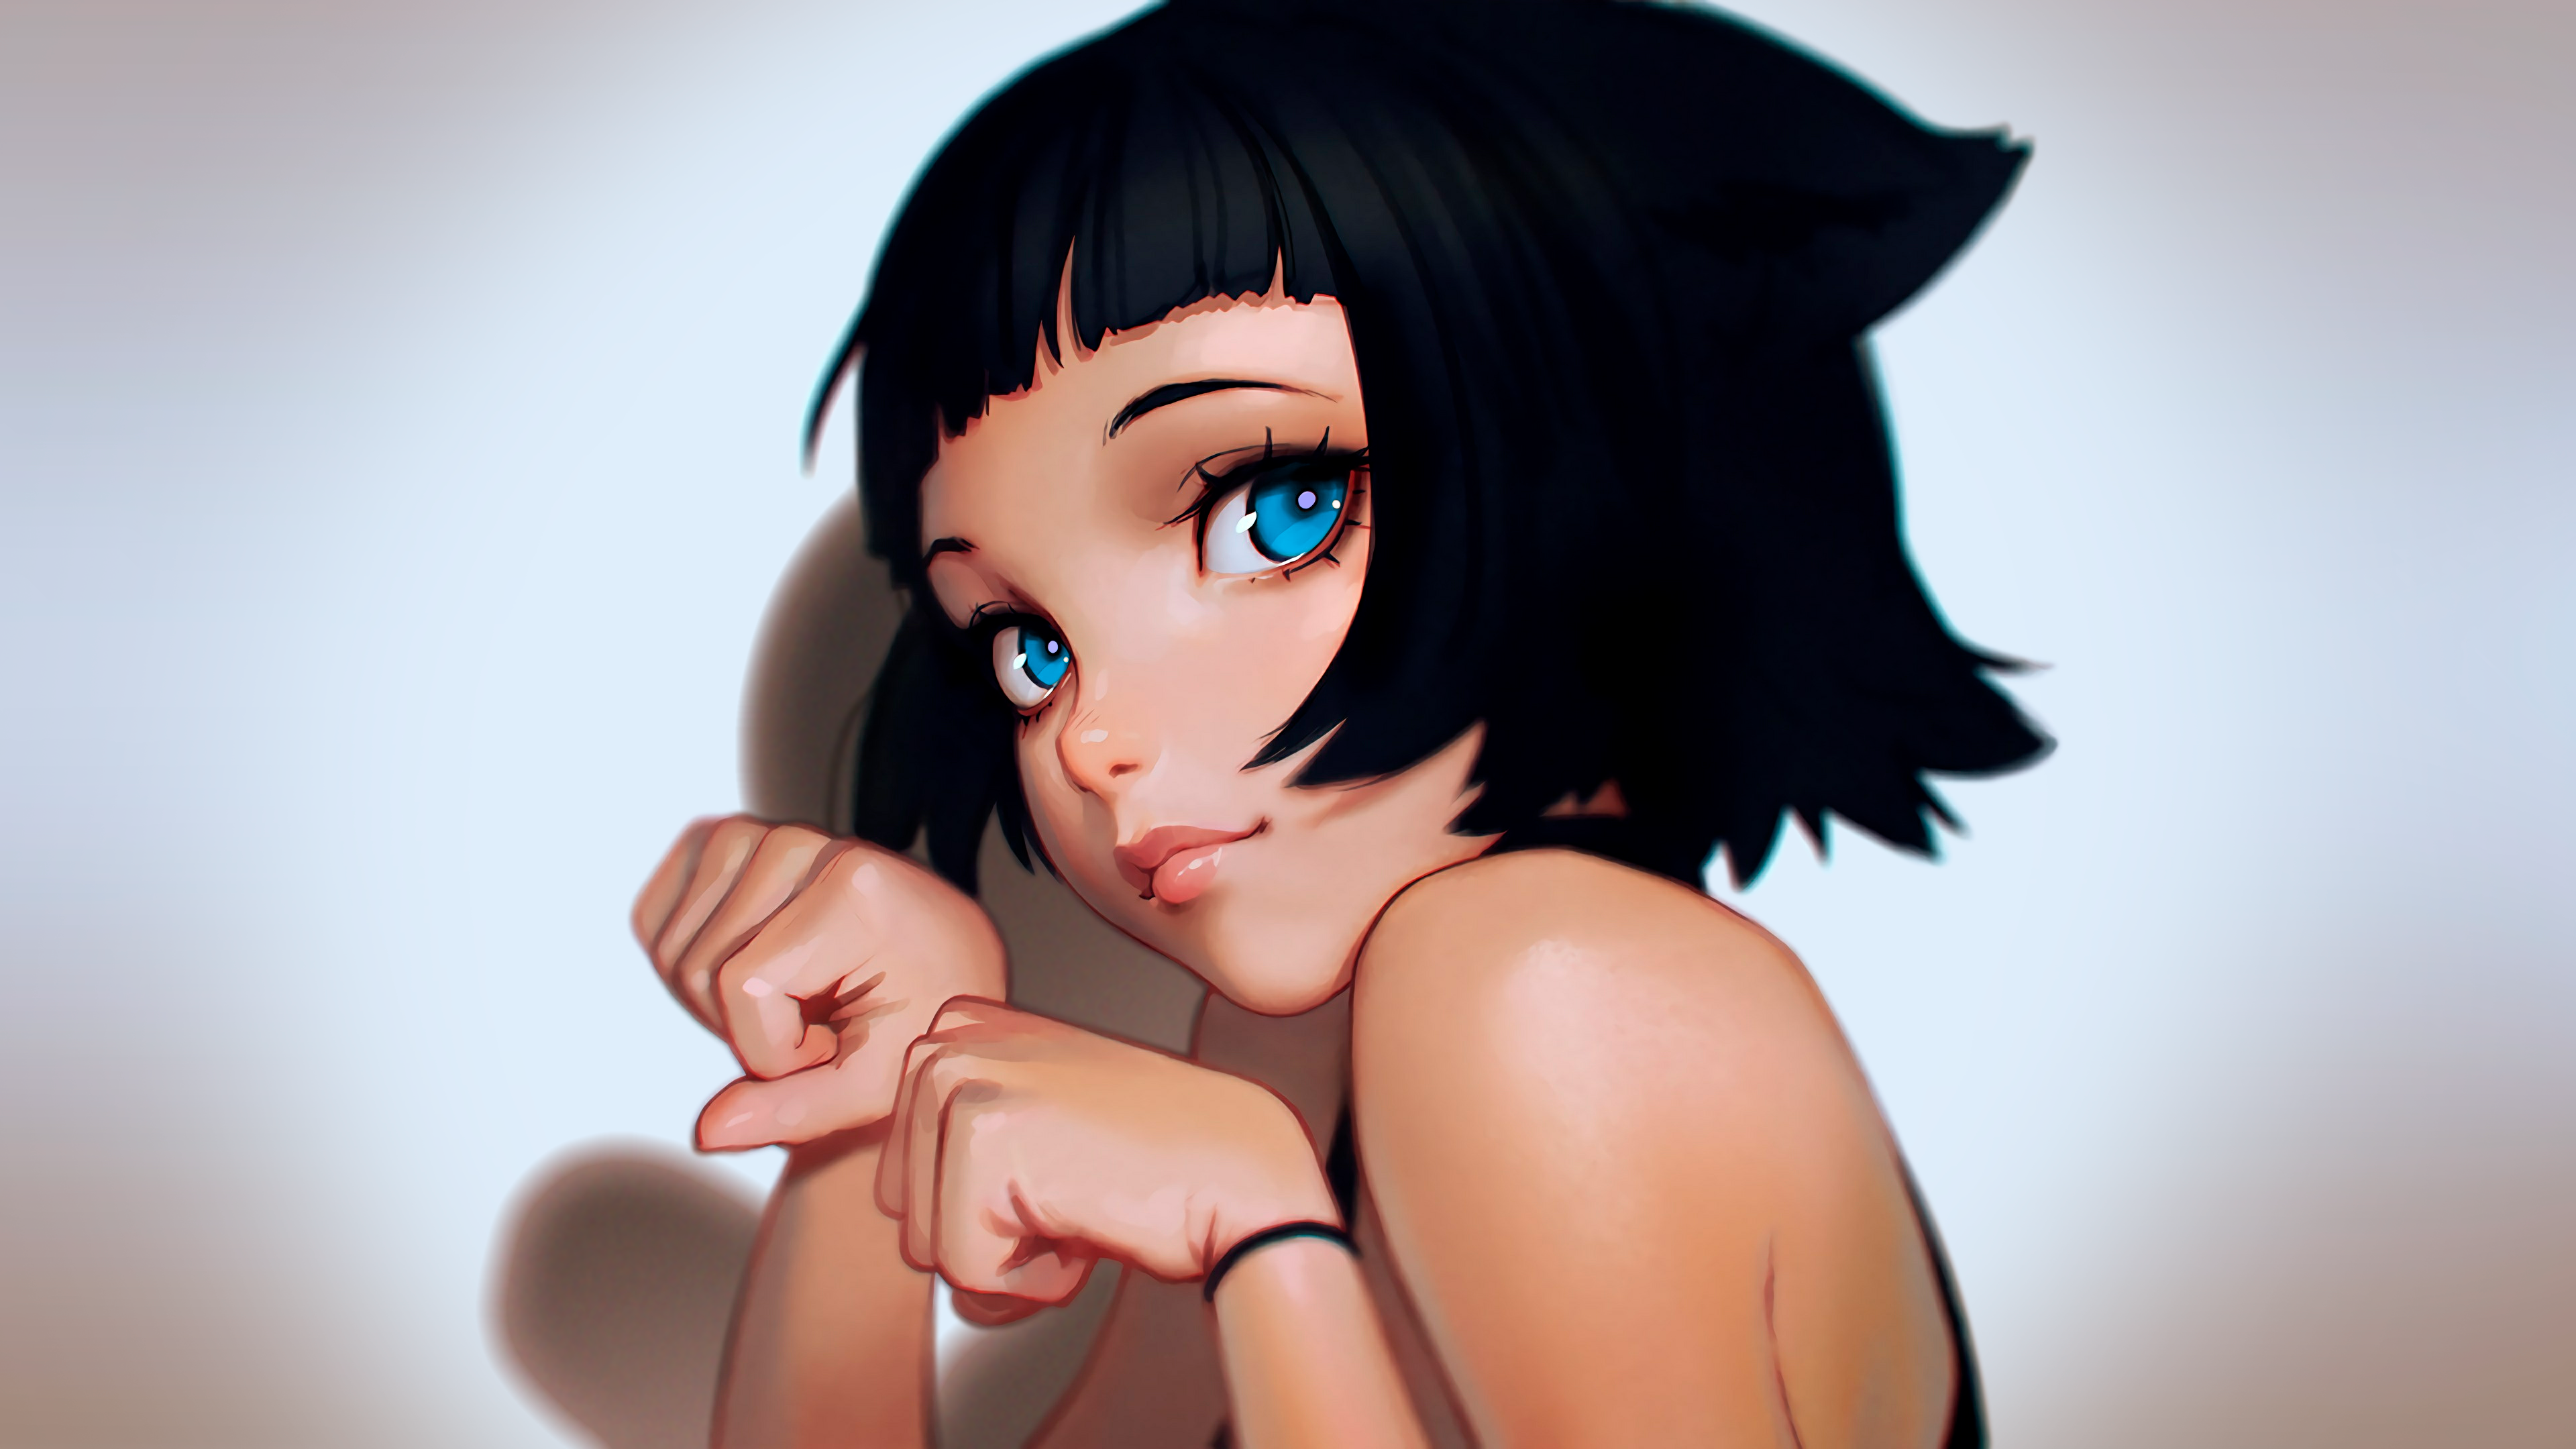 Anime Anime Girls Artwork Semi Realistic Black Hair Short Hair Black Shirt Blue Eyes Cat Girl Bangs  3840x2160